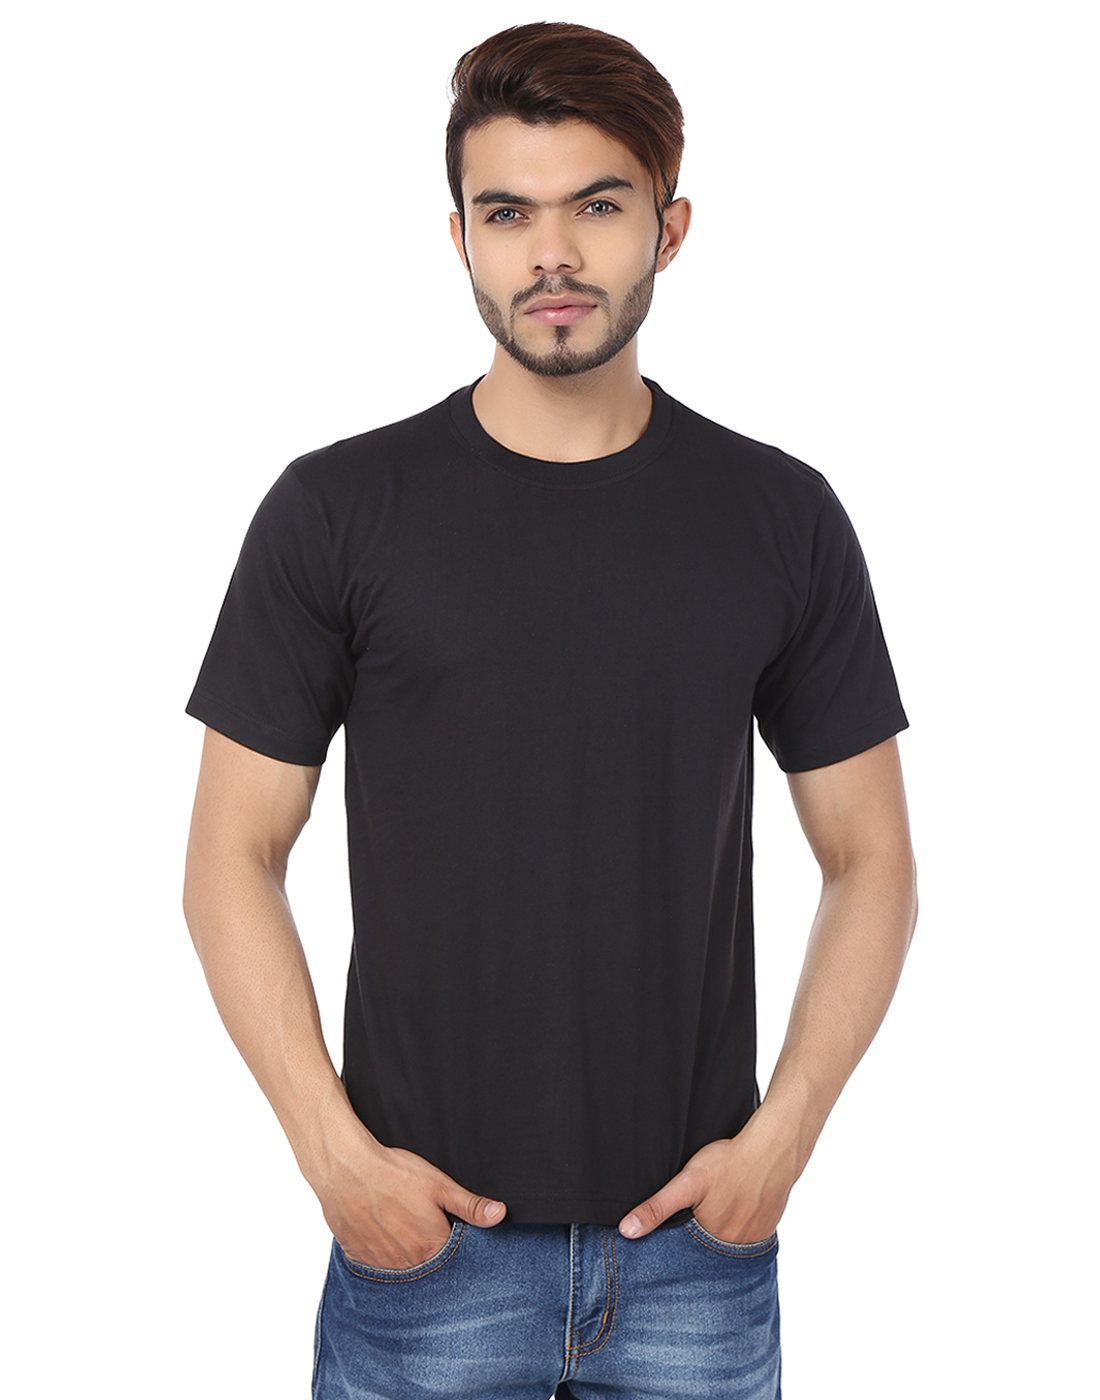 Buy Weardo Plain Black Crew Neck T-Shirt Online @ ₹278 from ShopClues